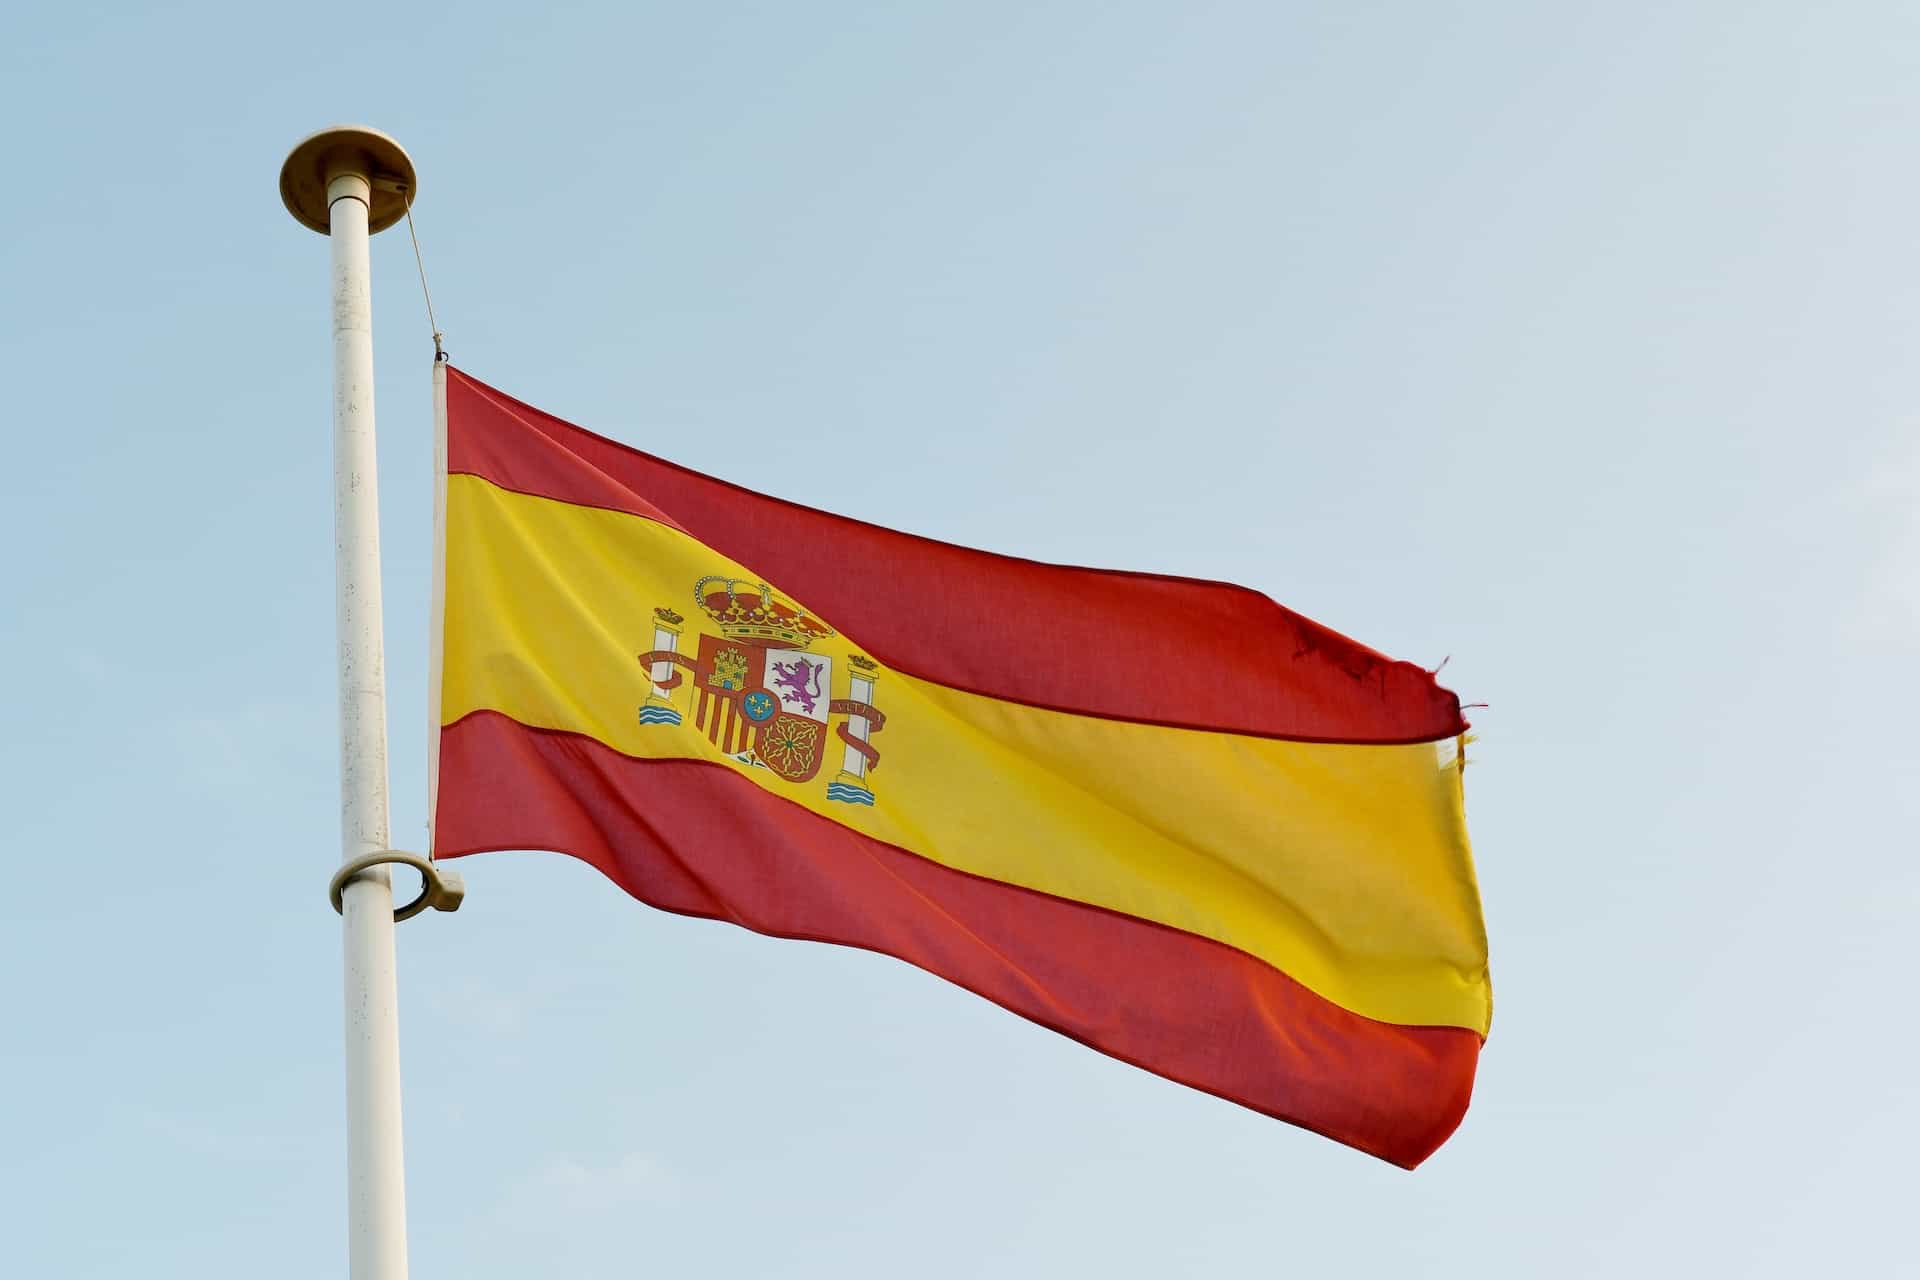 The Spanish flag waves on a flagpole.